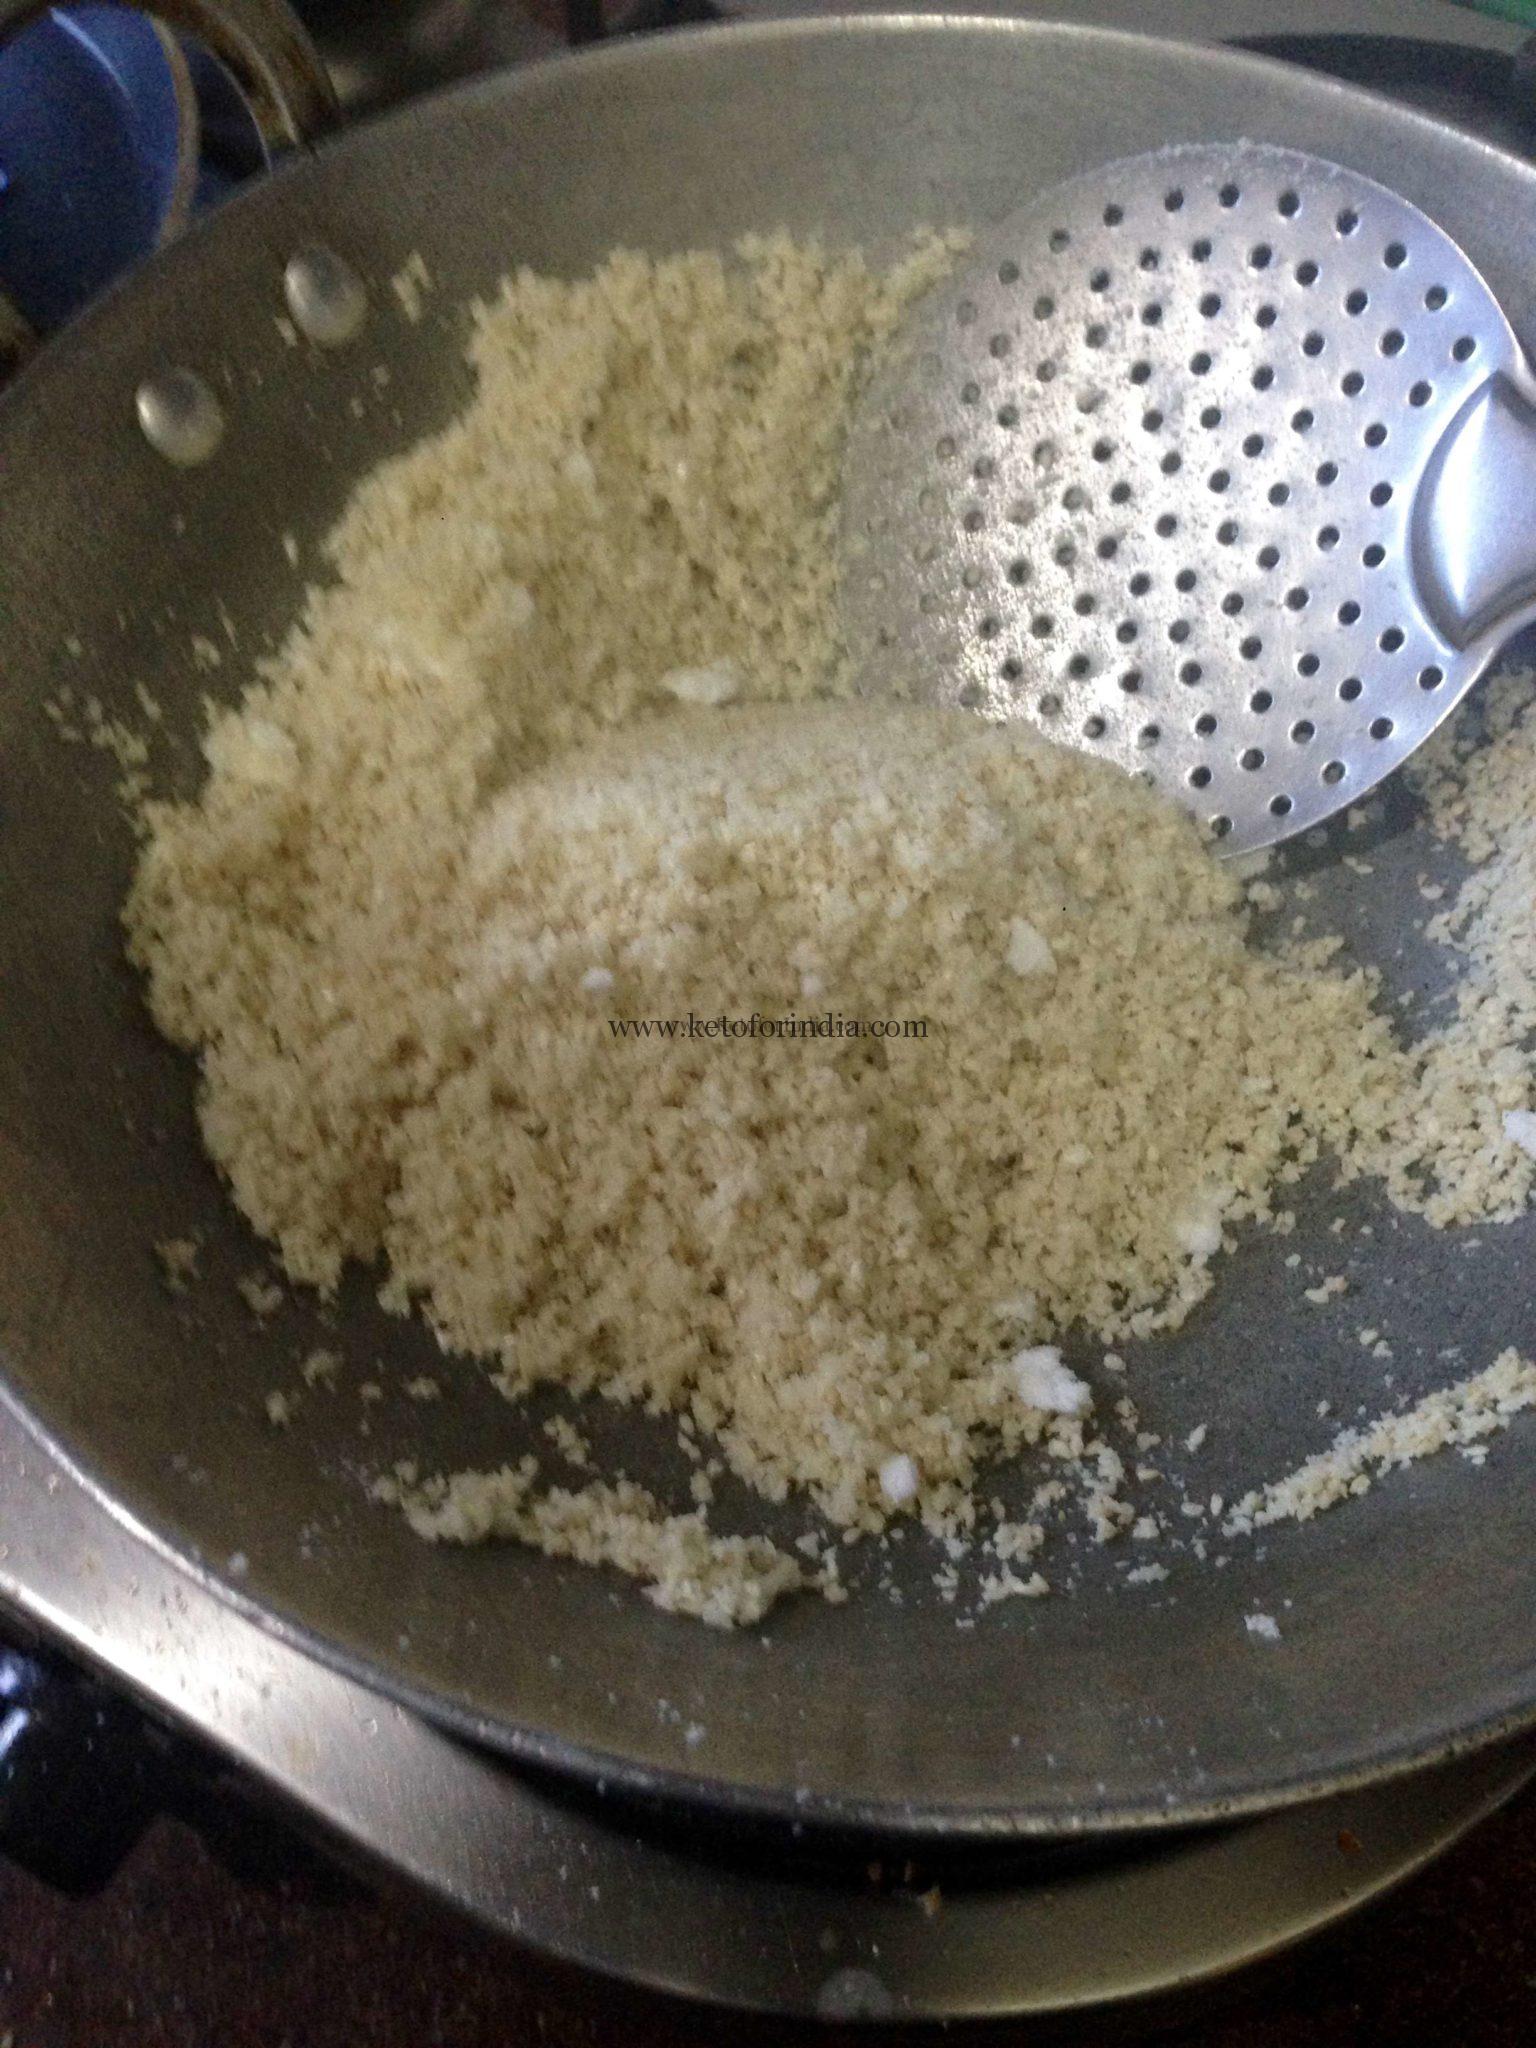 Priya's step by step keto til laddoo recipe for diwali